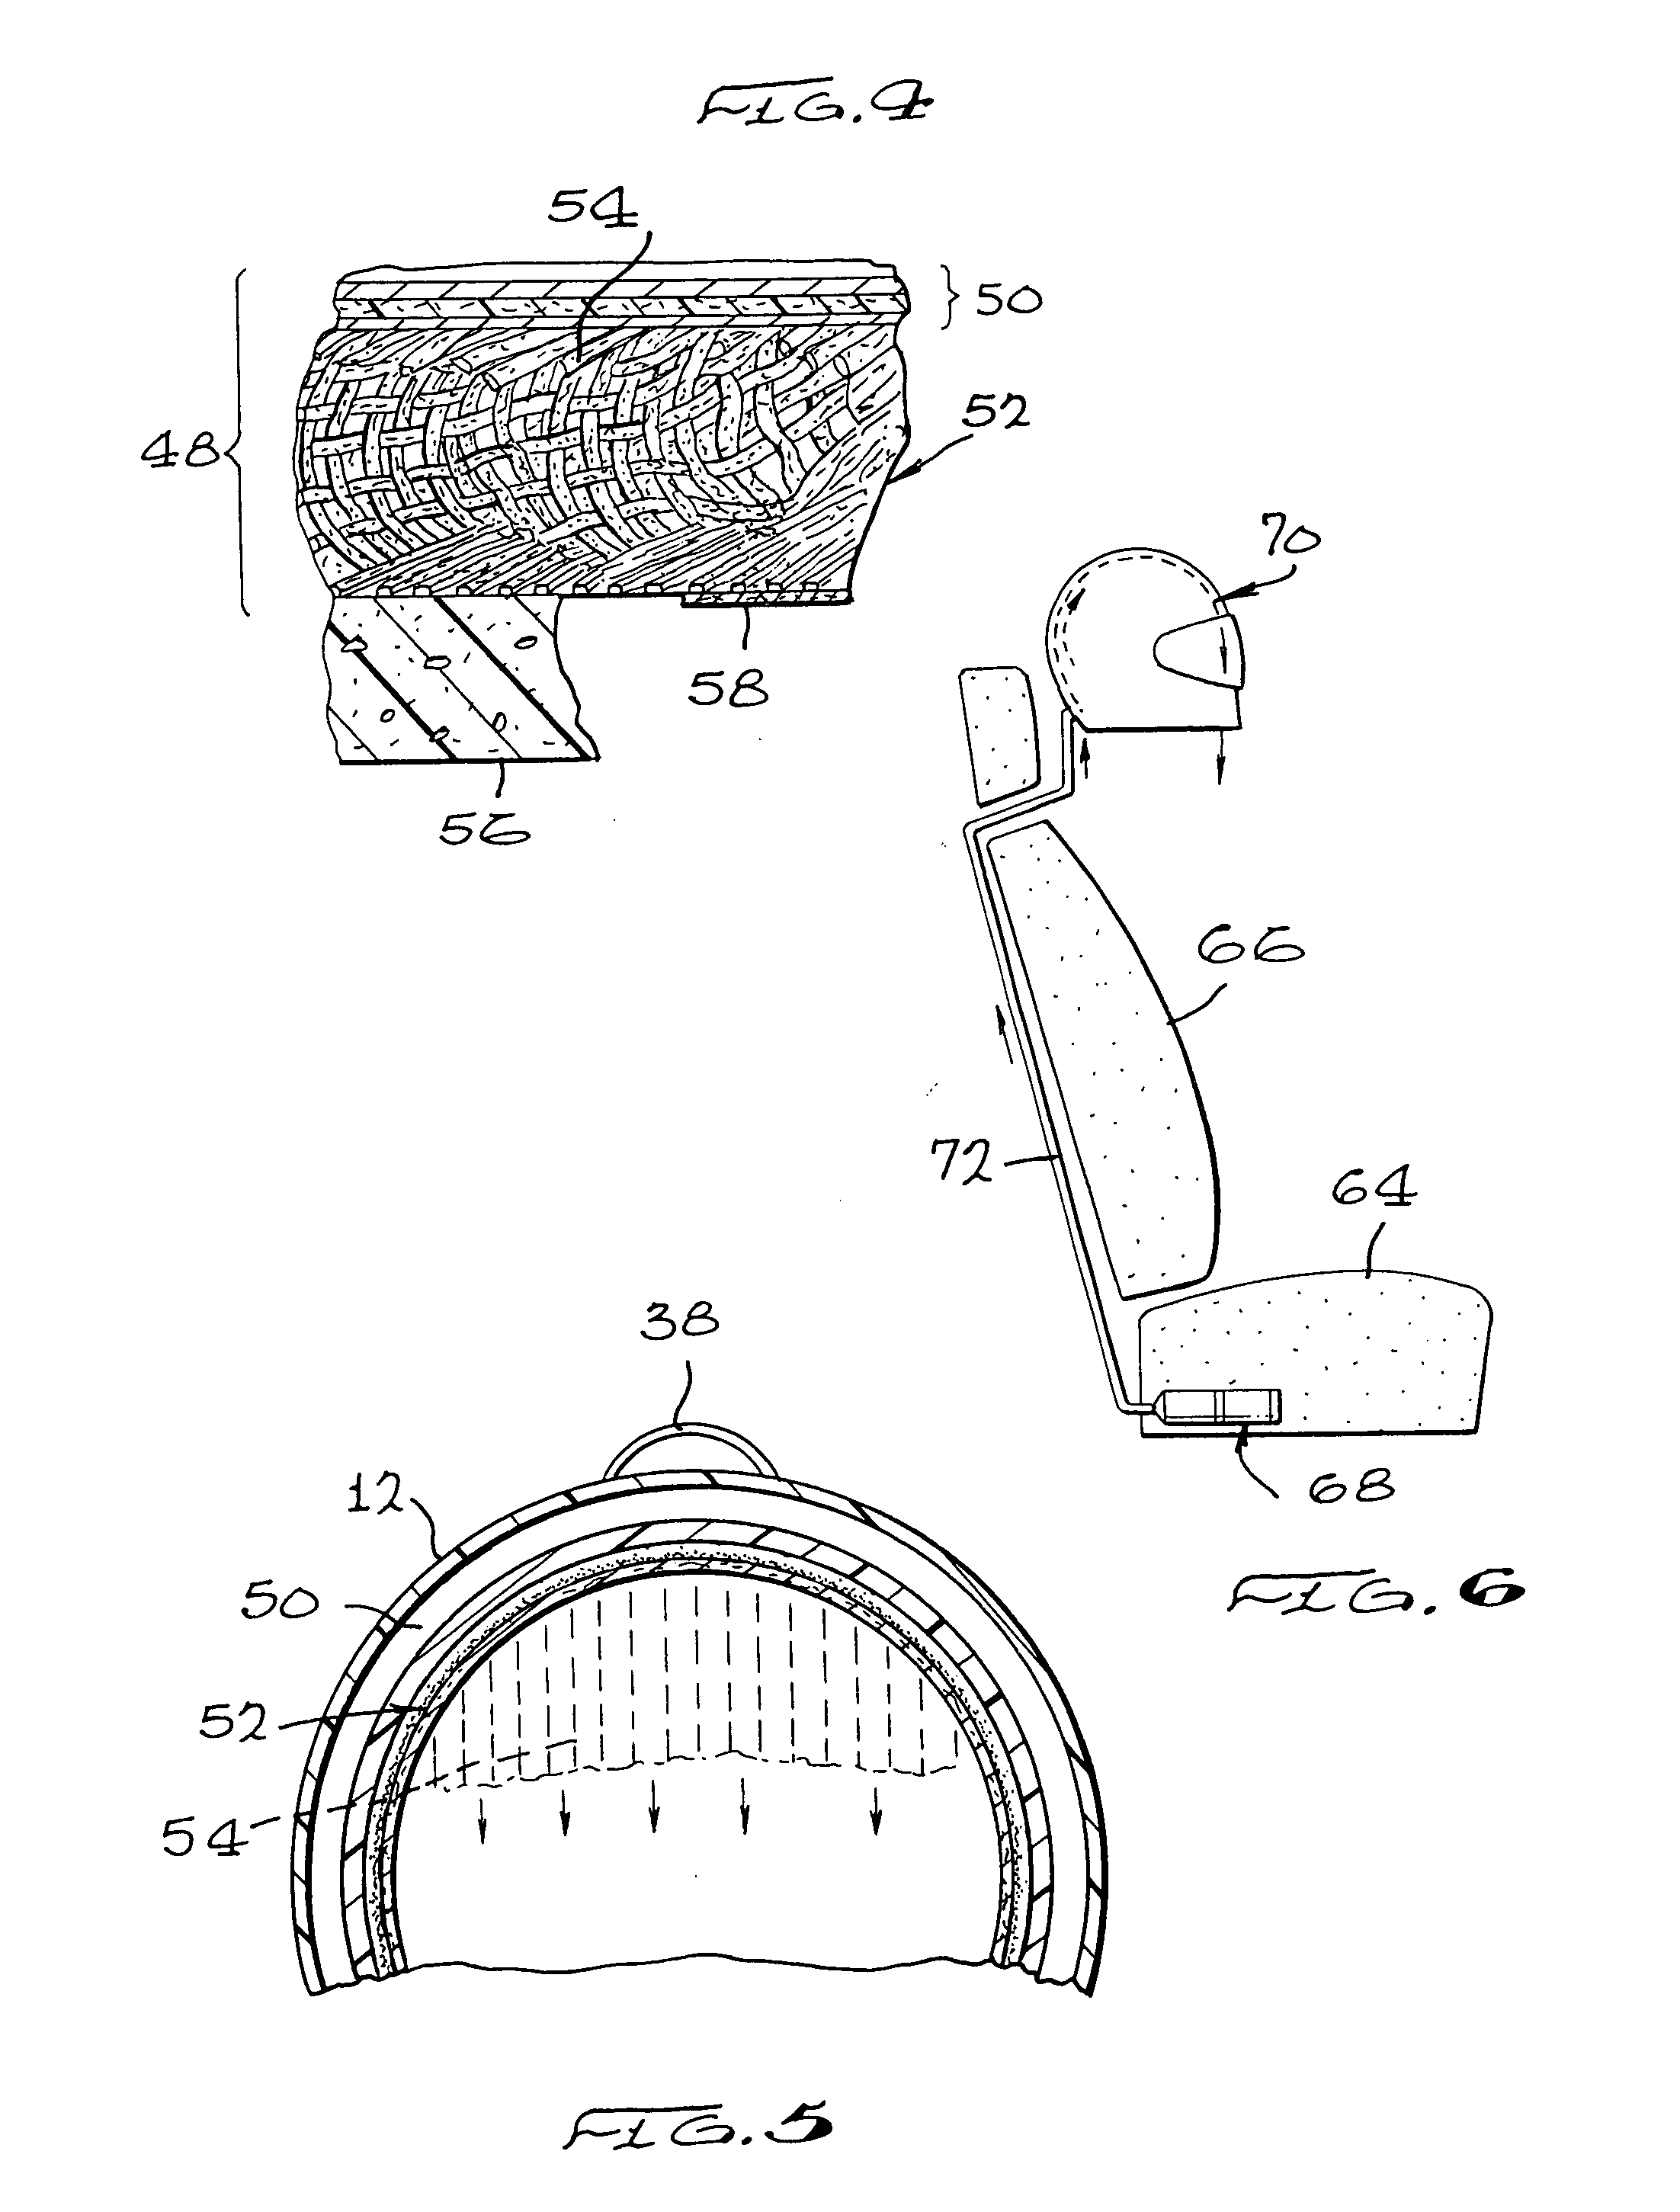 Air conditioned helmet apparatus